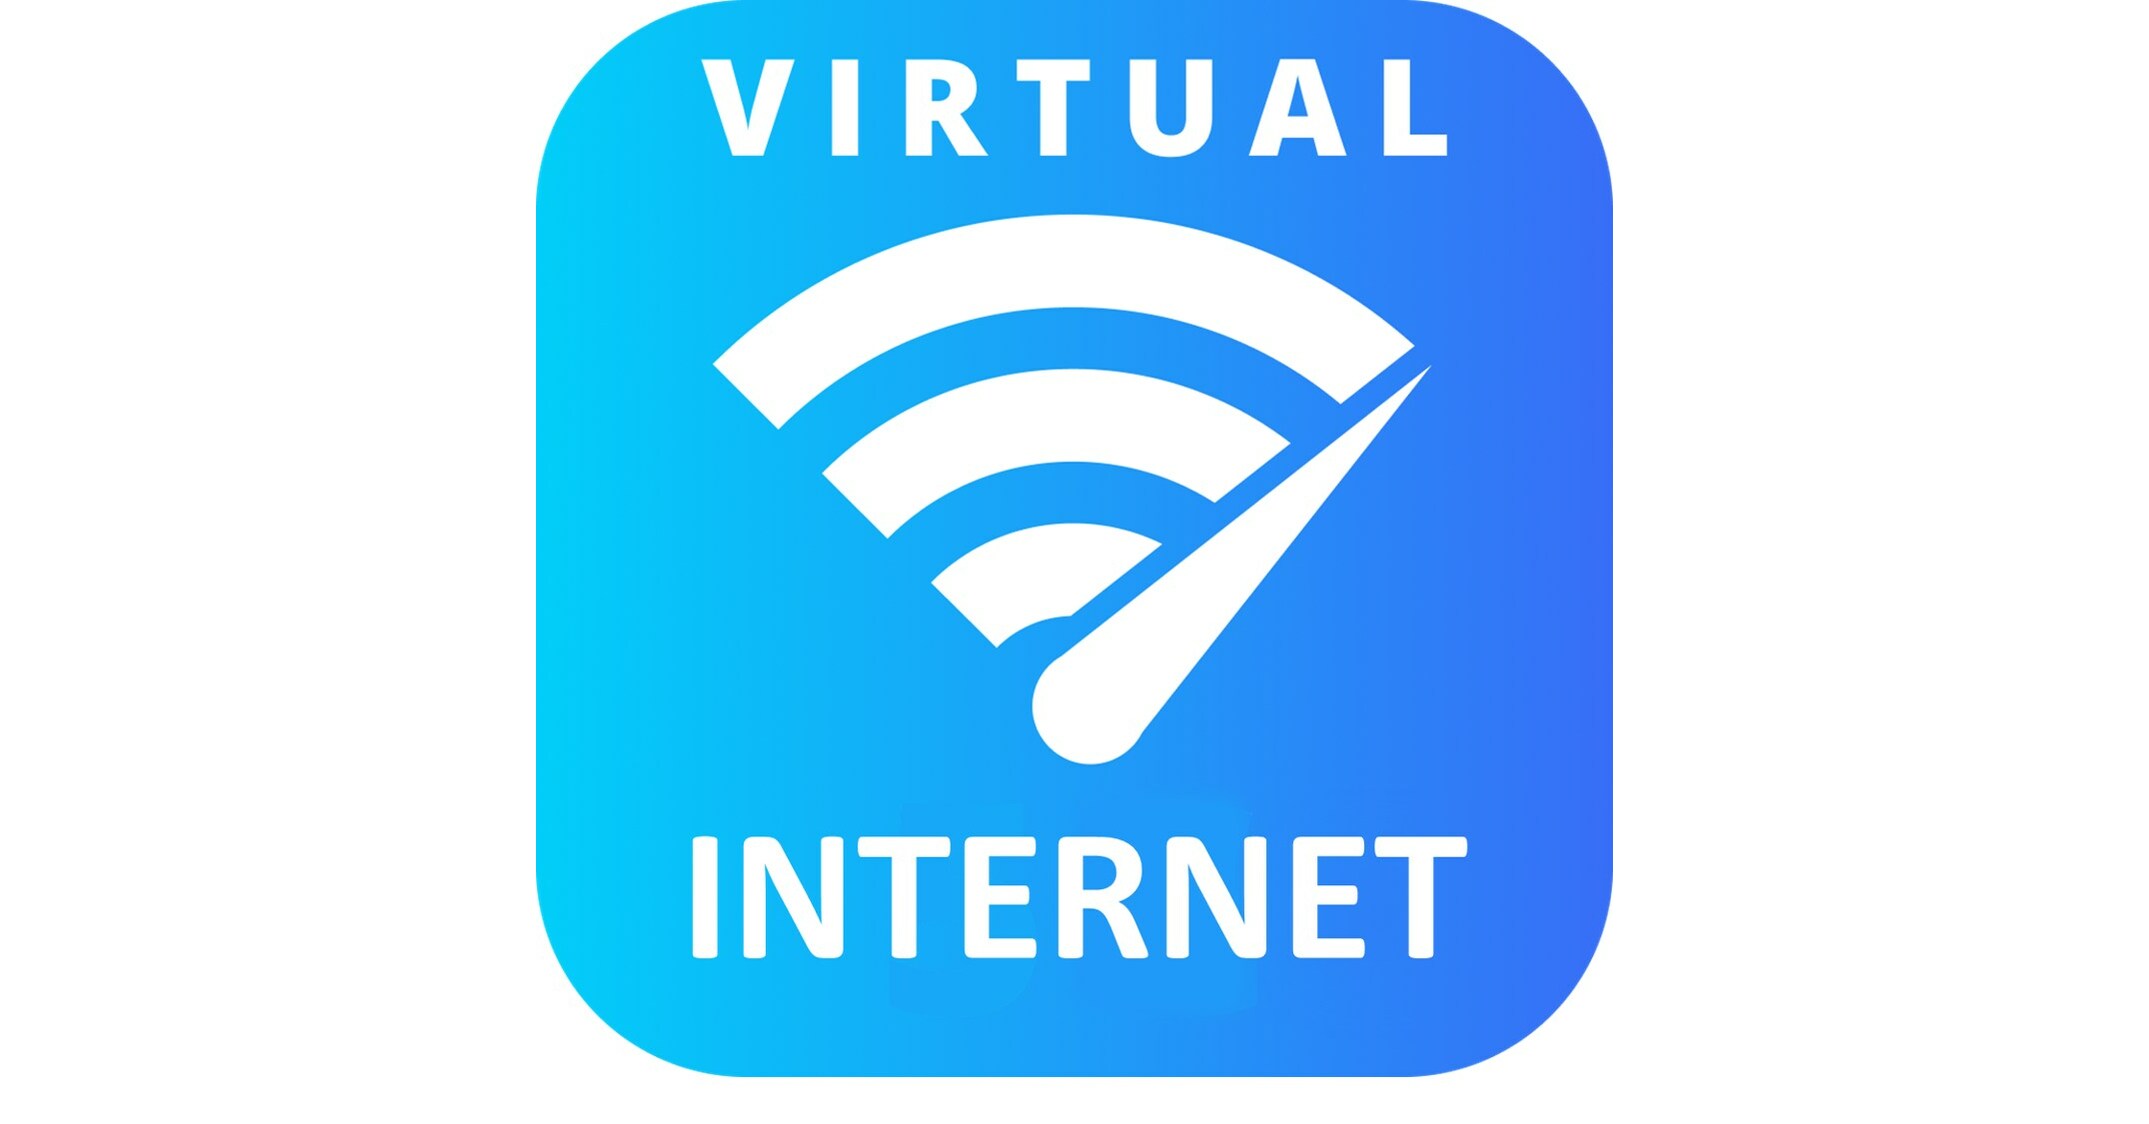 Virtual Internet Announces New Virtual Messenger